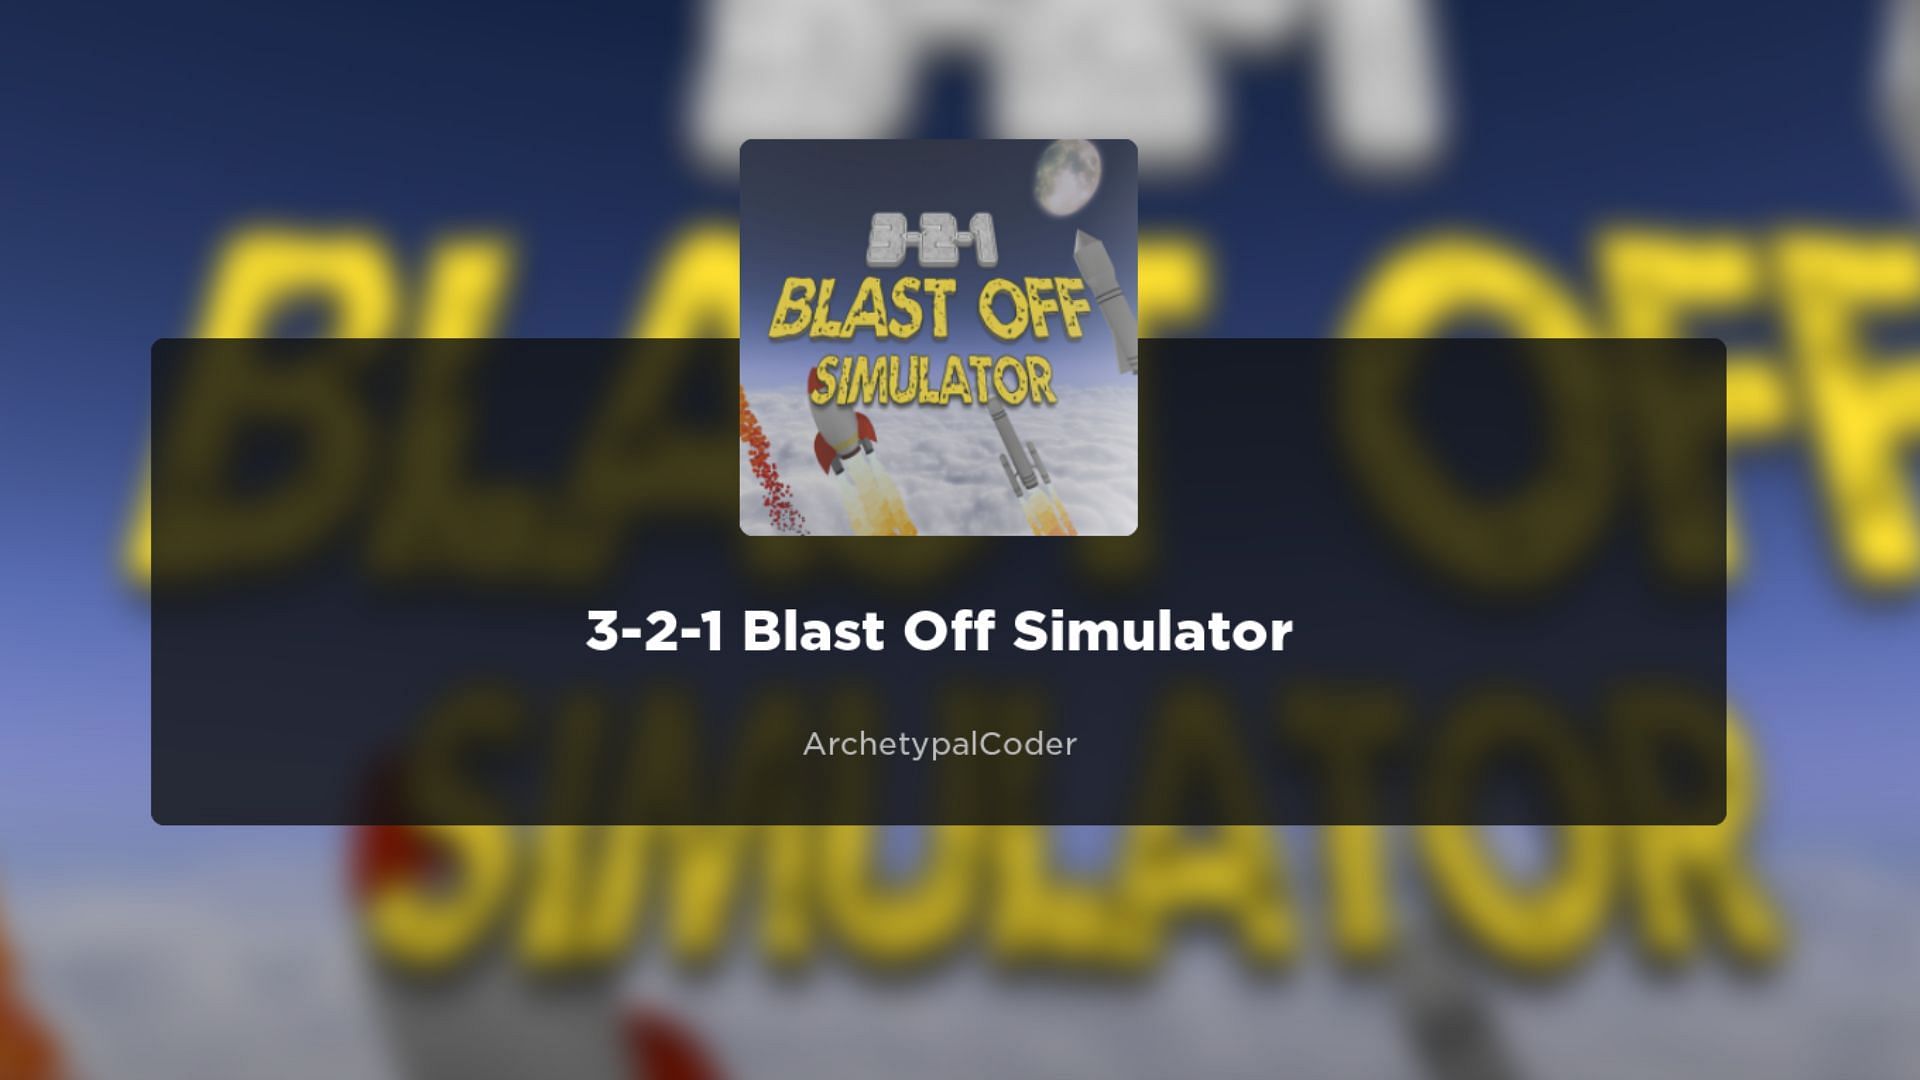 3-2-1 Blast Off Simulator Codes